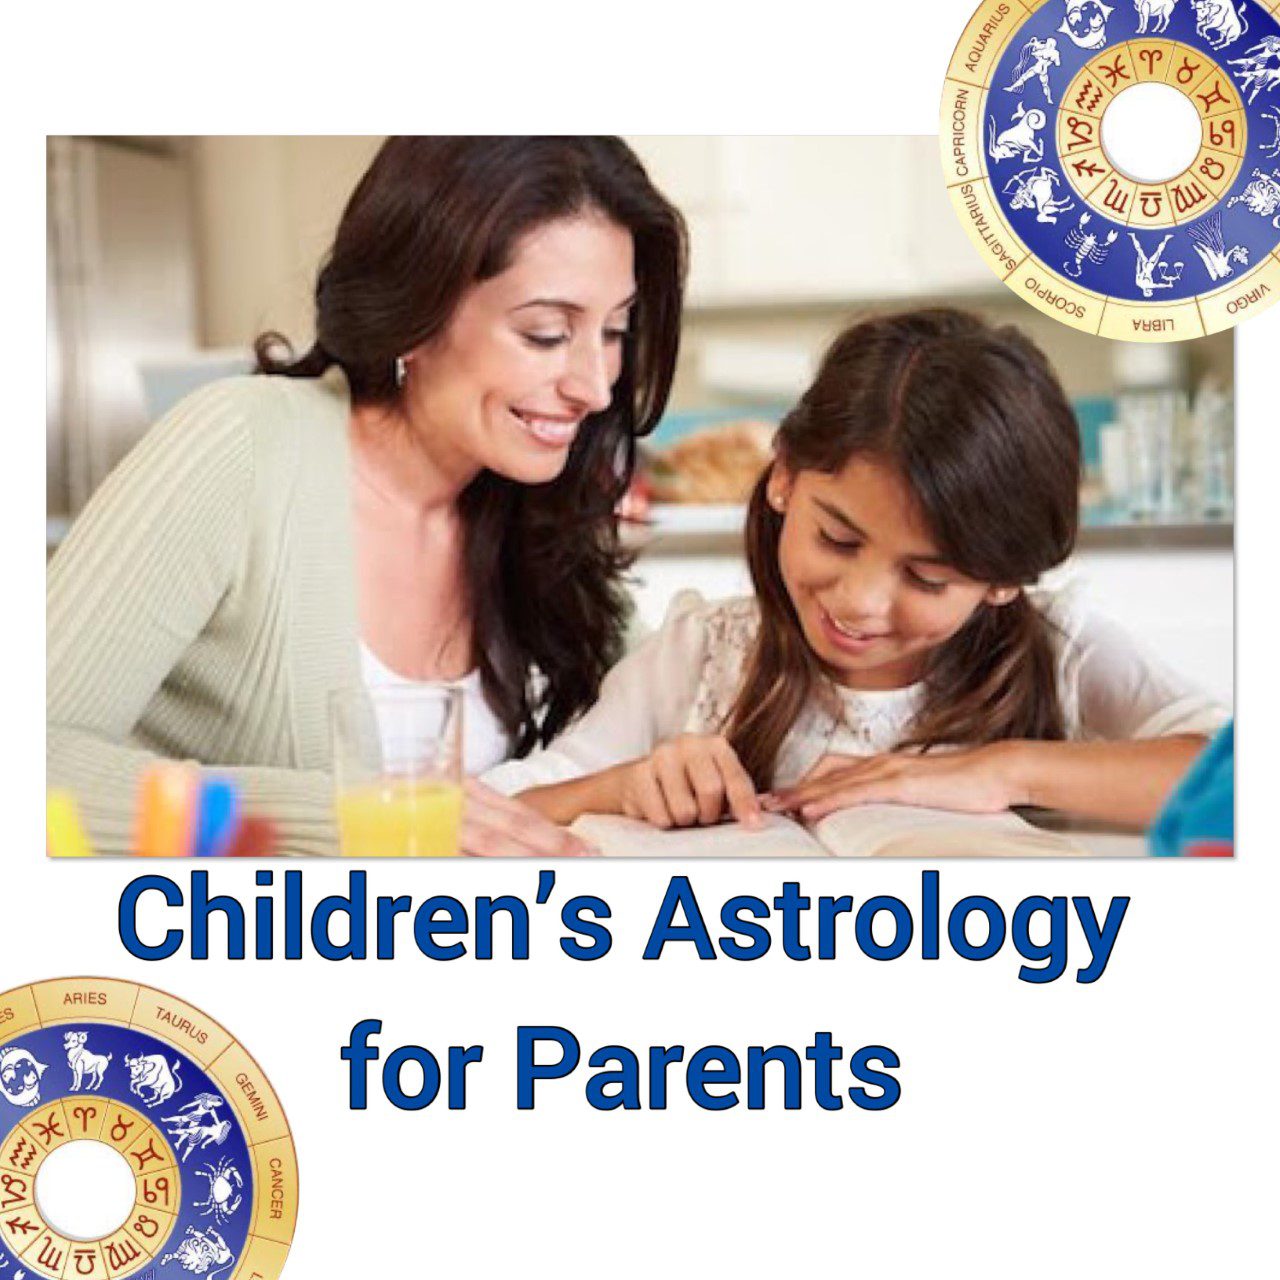 Children’s Astrology for Parents